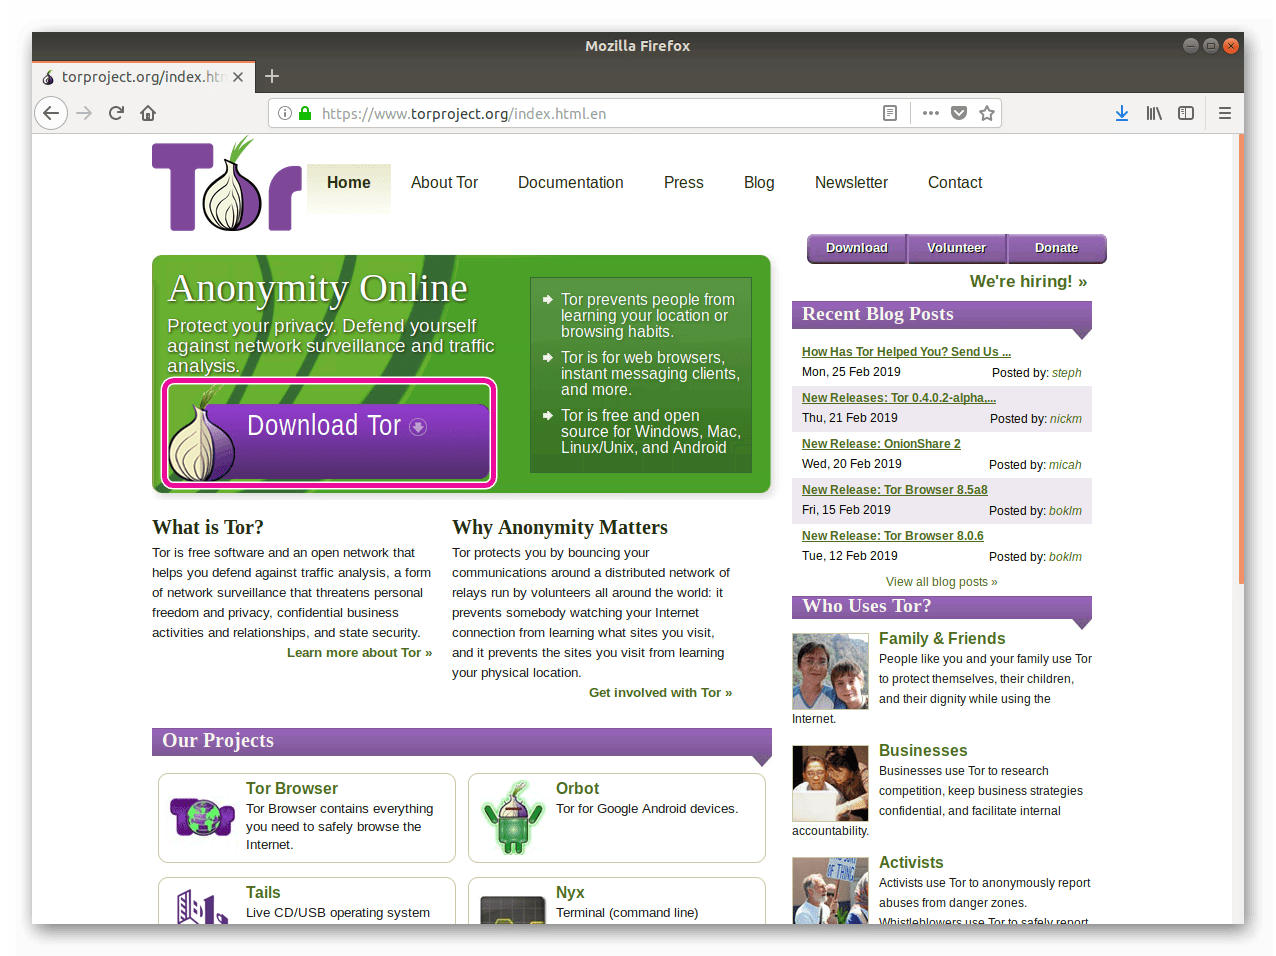 Аналог tor browser для linux мега скачать бесплатно tor browser portable mega